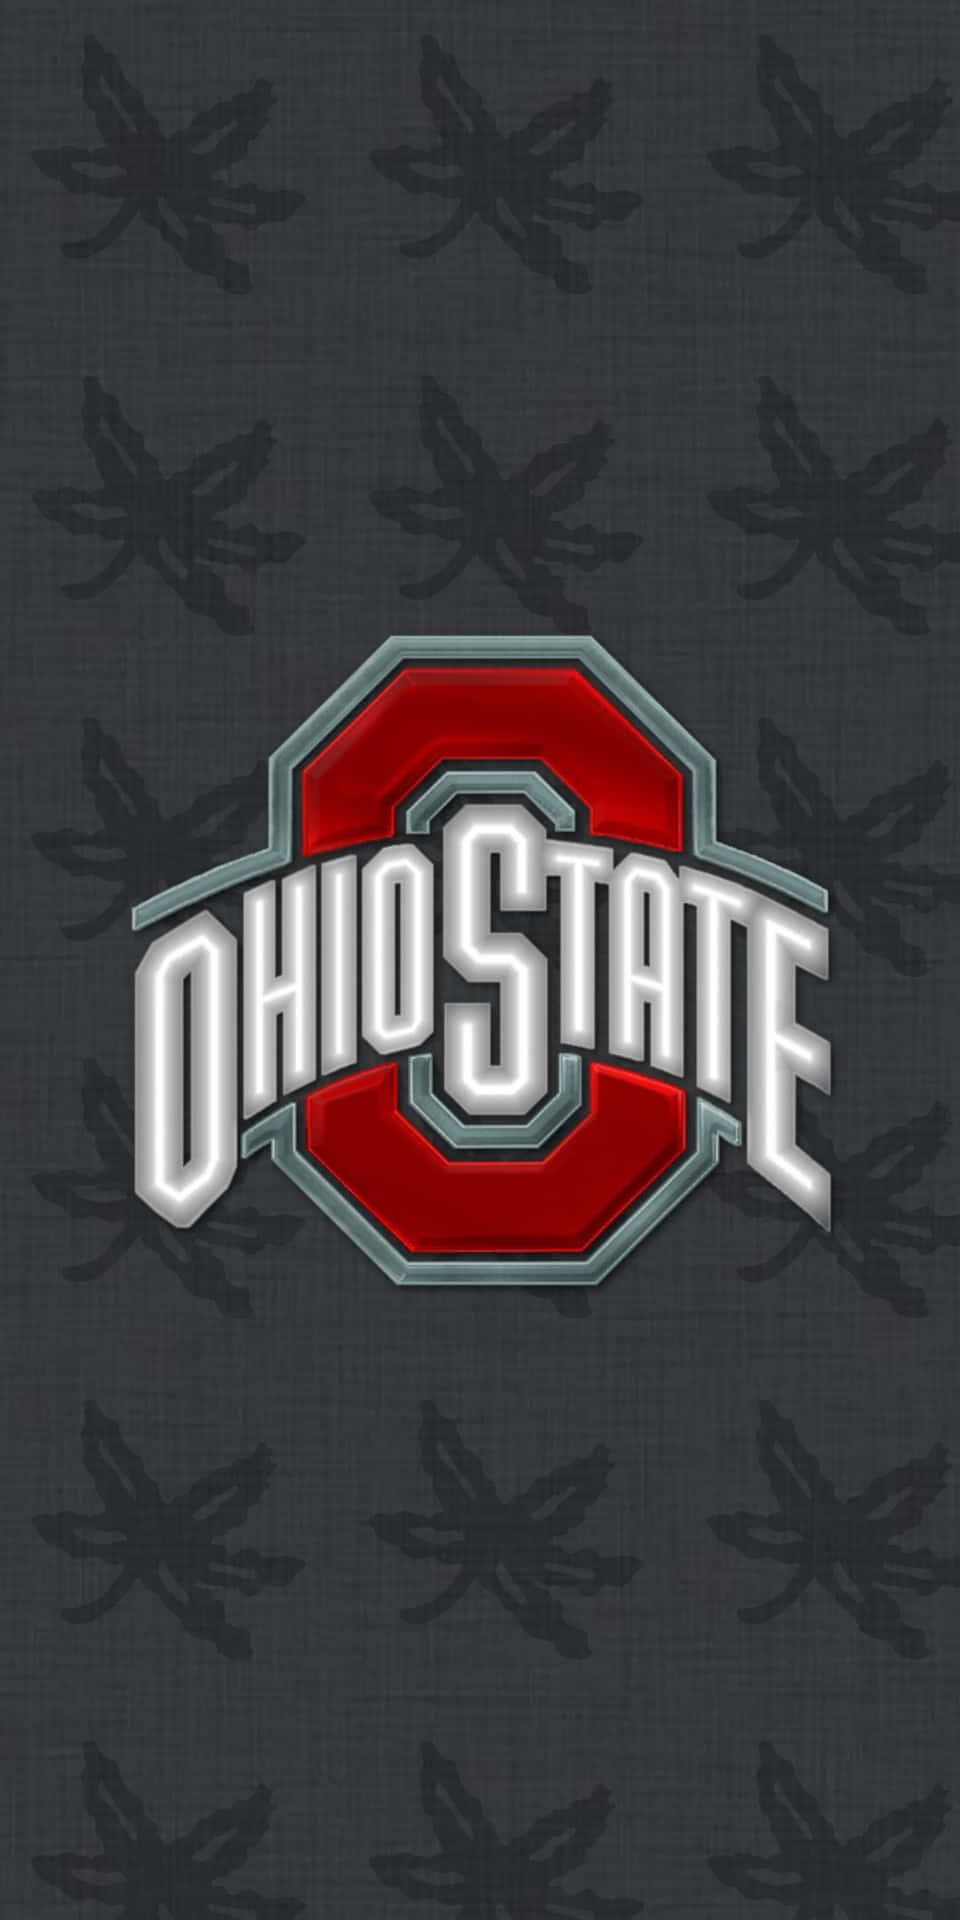 Ohio State University Logo On A Black Background Wallpaper